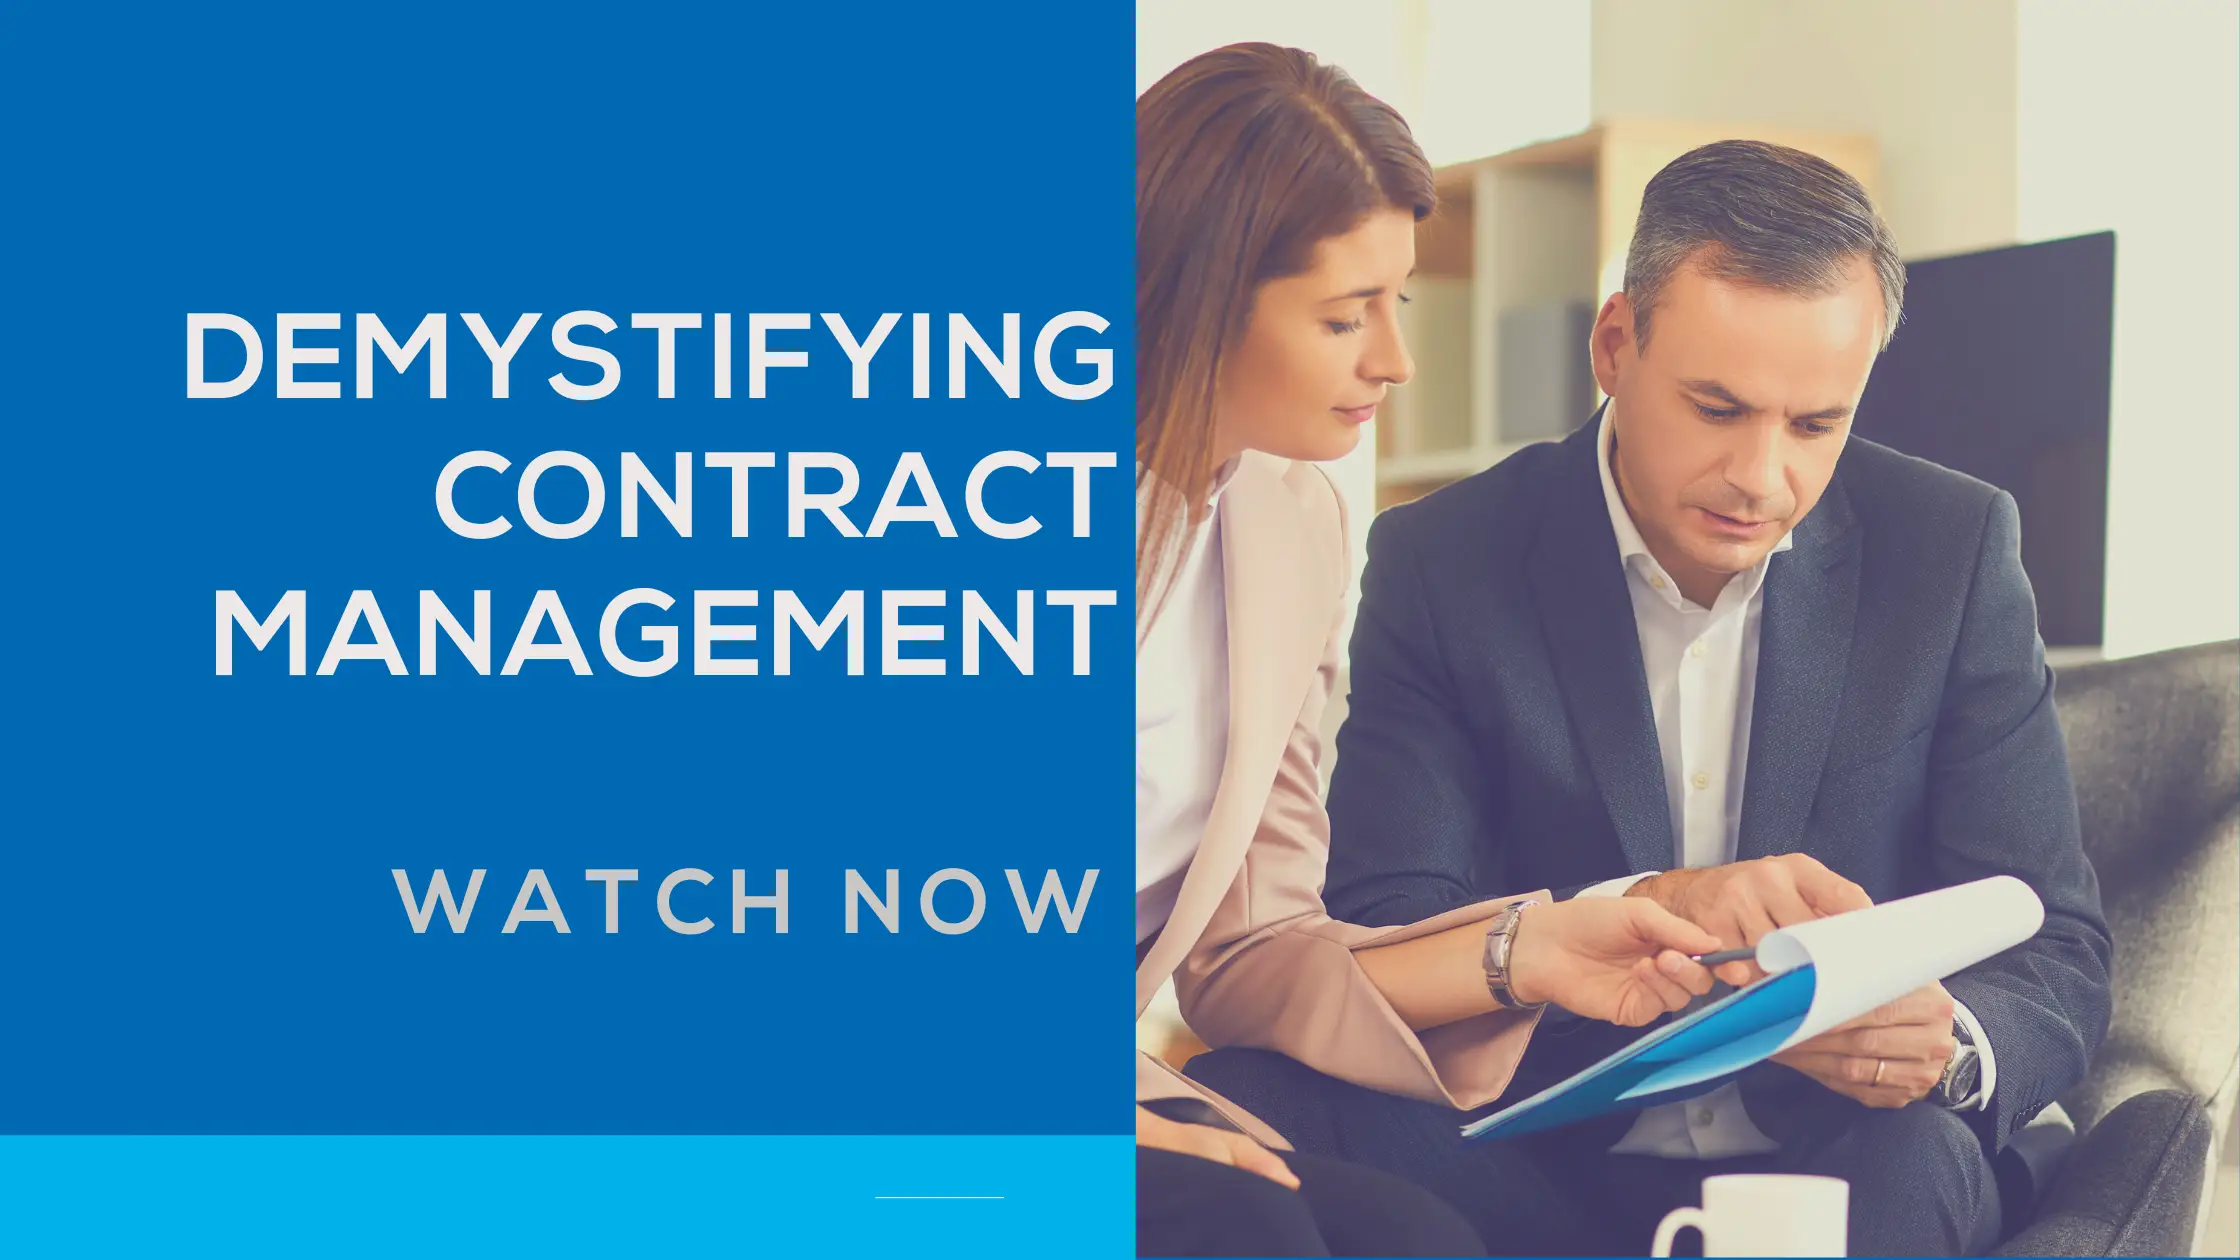 webinar - Demystifying Contract Management.